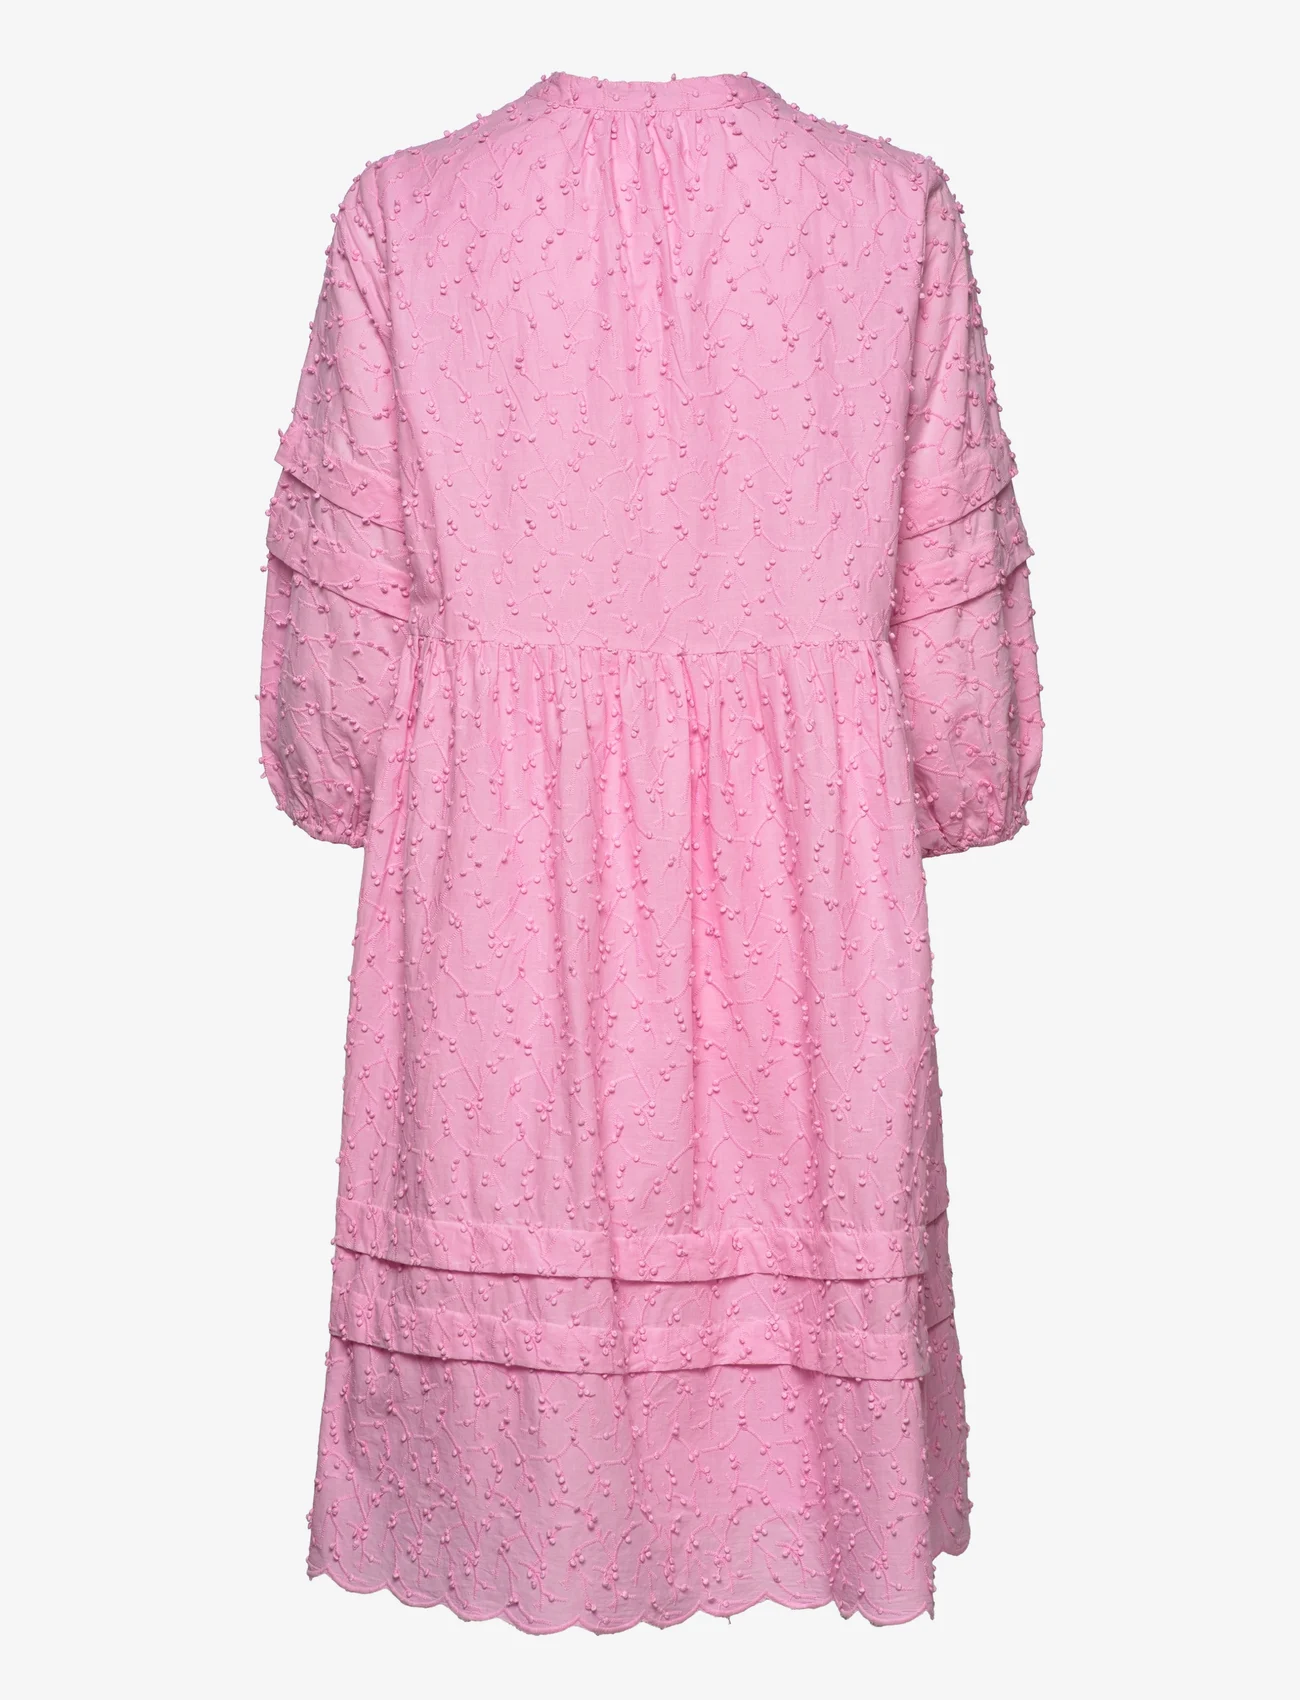 Selected Femme - SLFMINJA 3/4 BRODERI KNEE DRESS G - shirt dresses - lilac sachet - 1